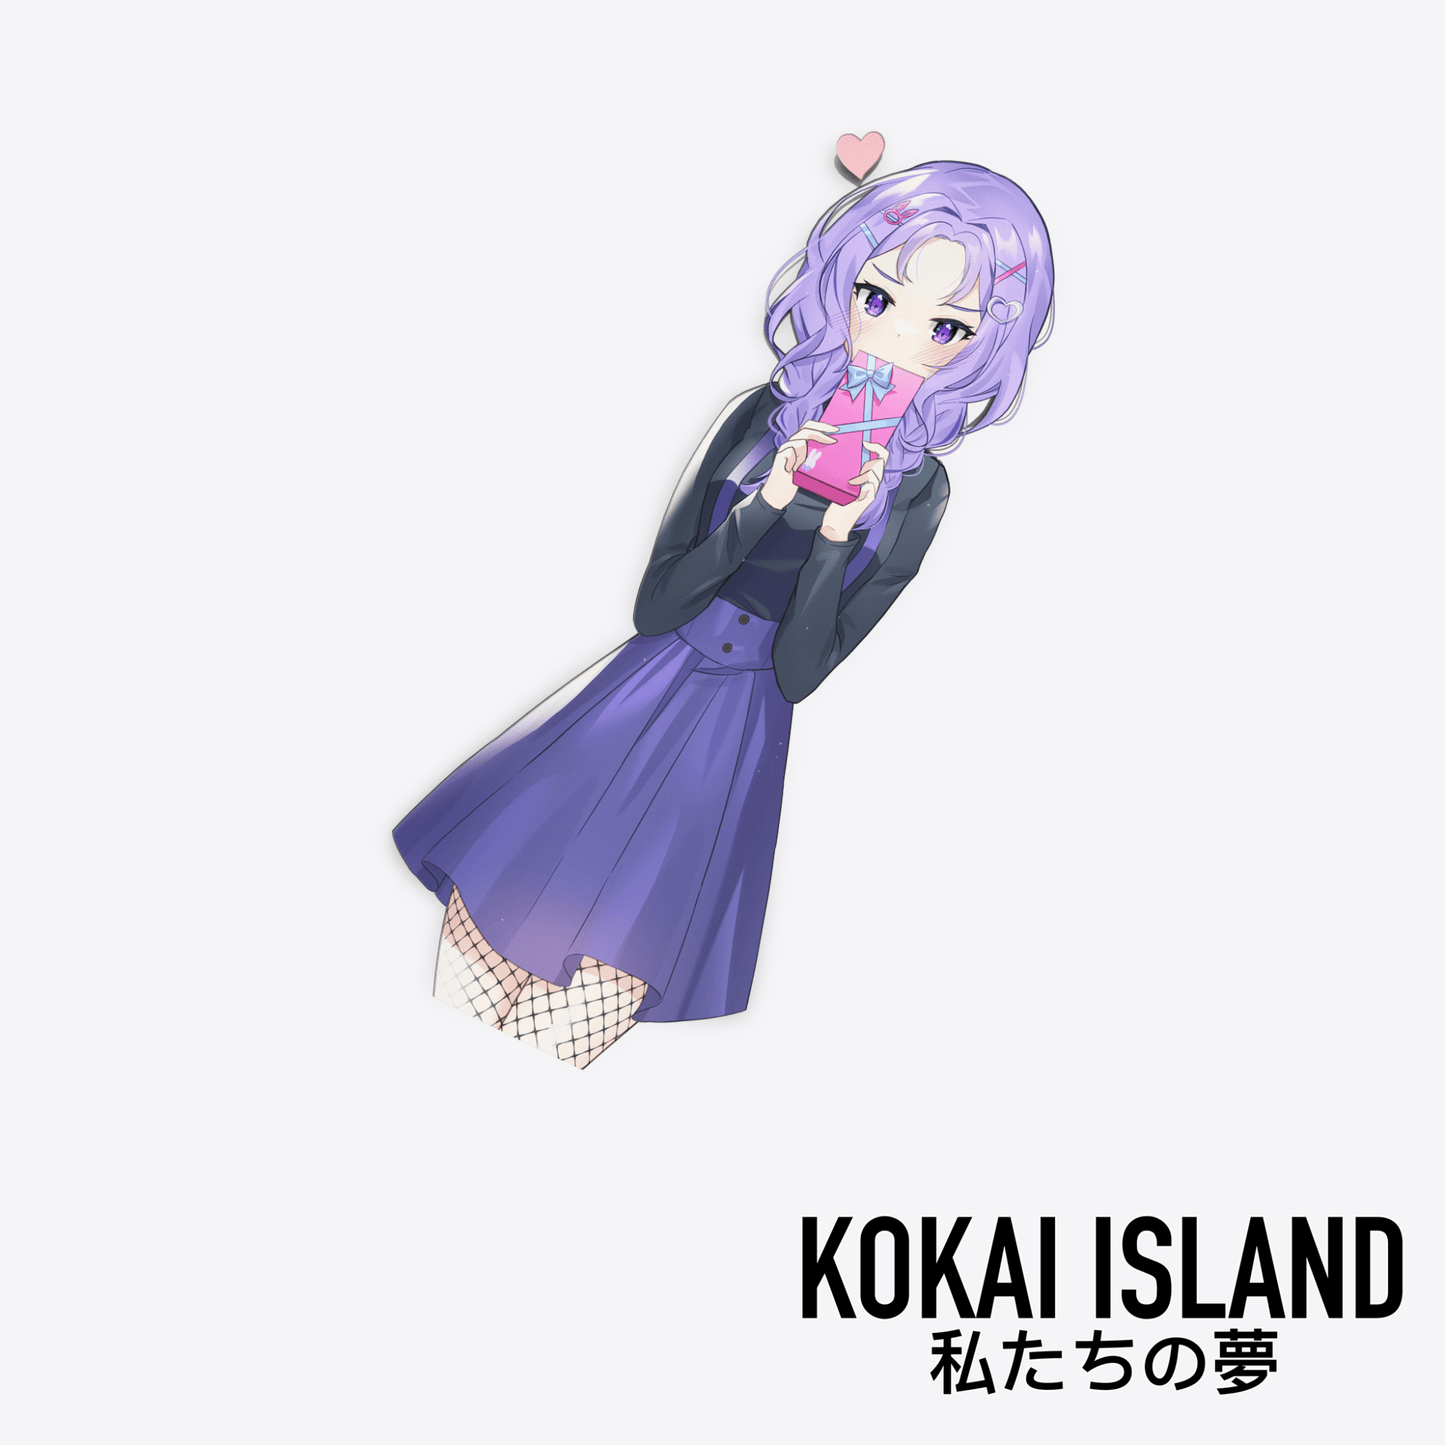 Koko V-Day DecalDecalKokai Island